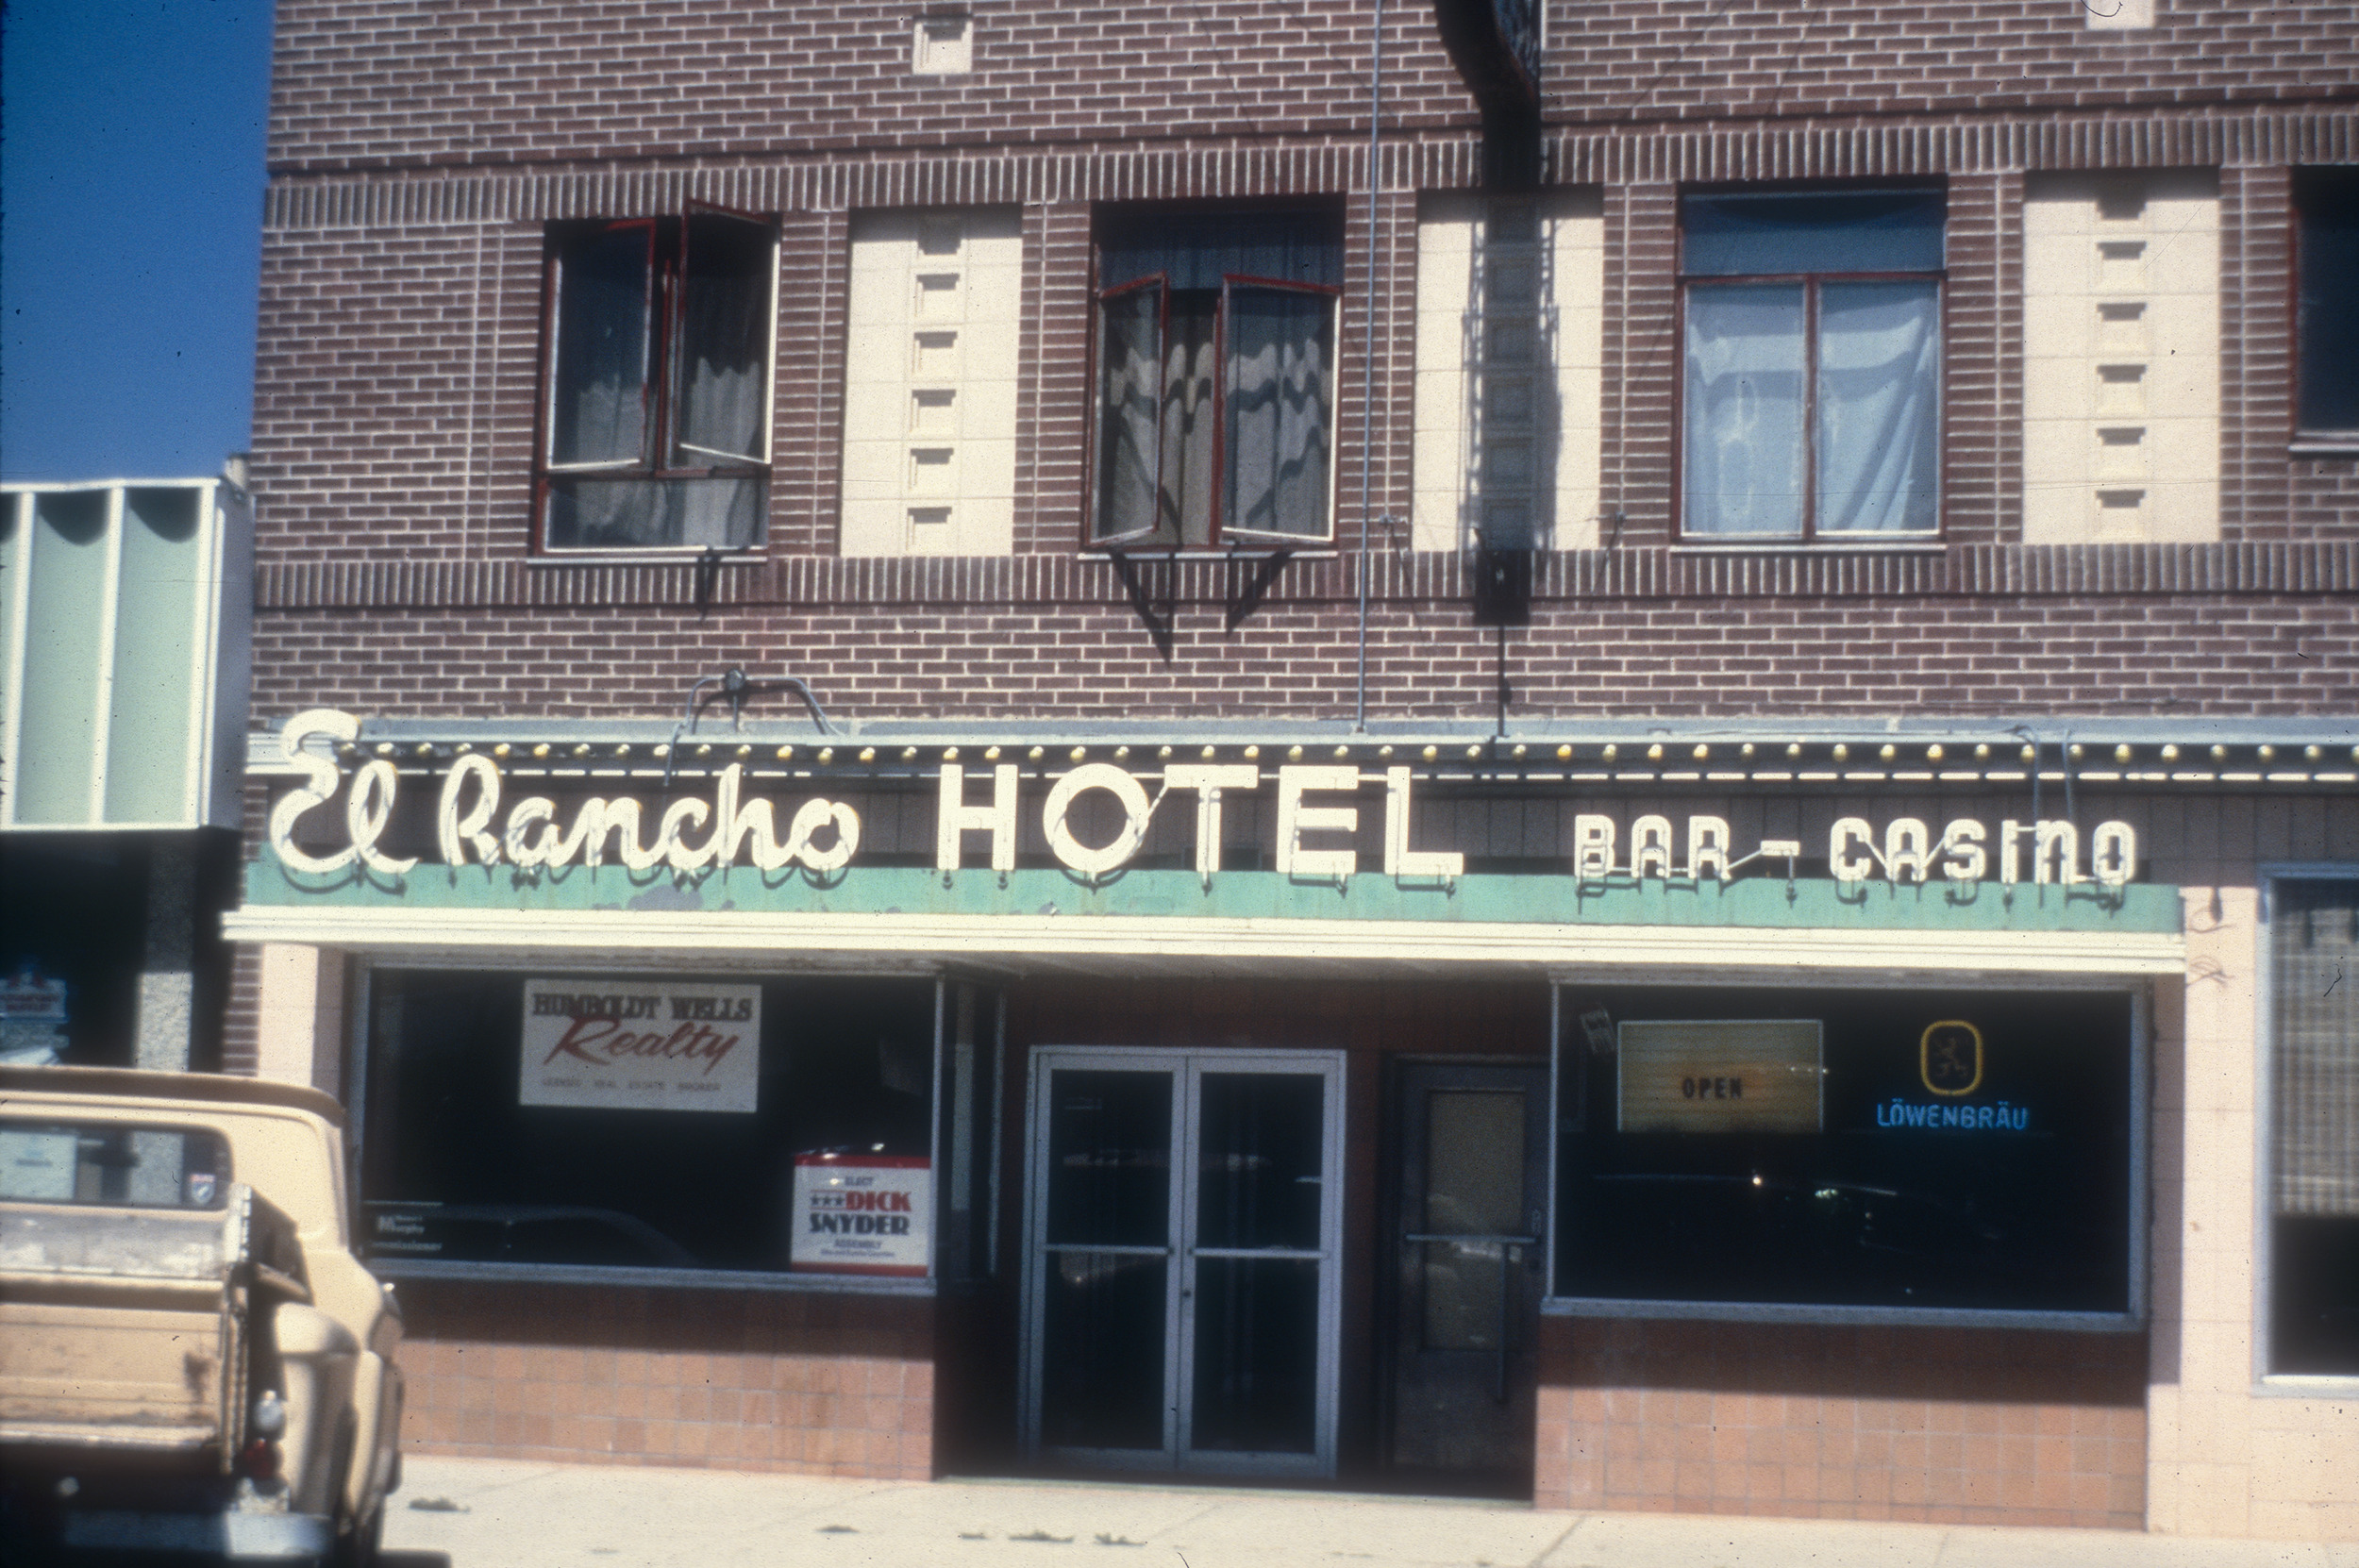 Slide of the El Rancho Hotel, Wells, Nevada, 1986